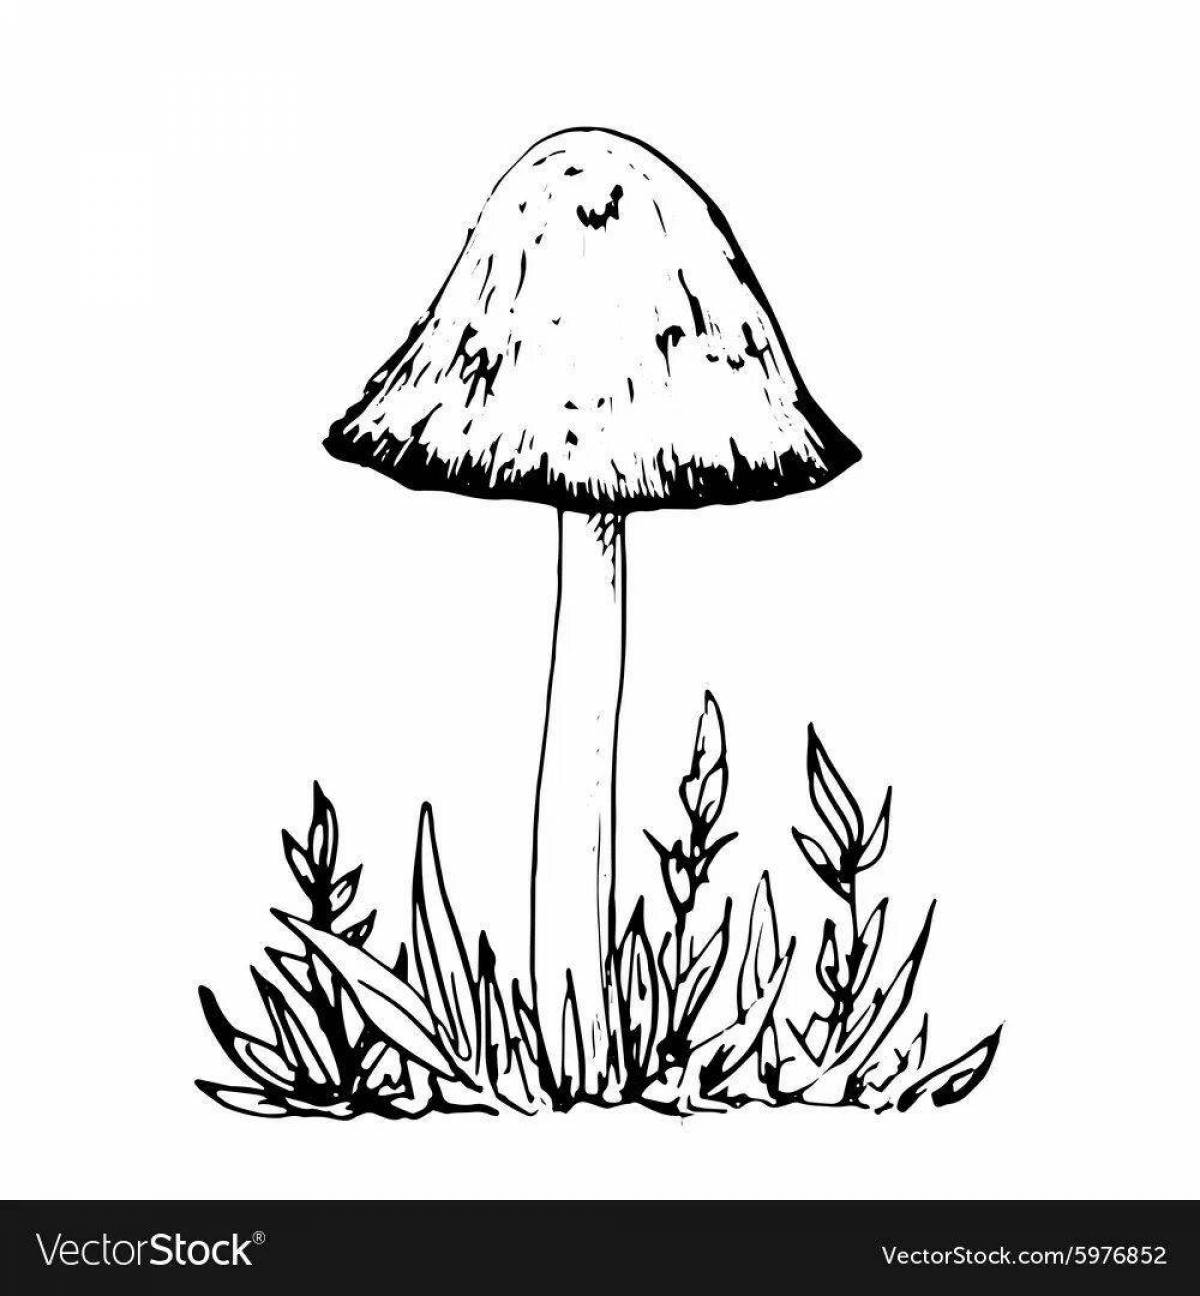 Shiny toadstool mushrooms